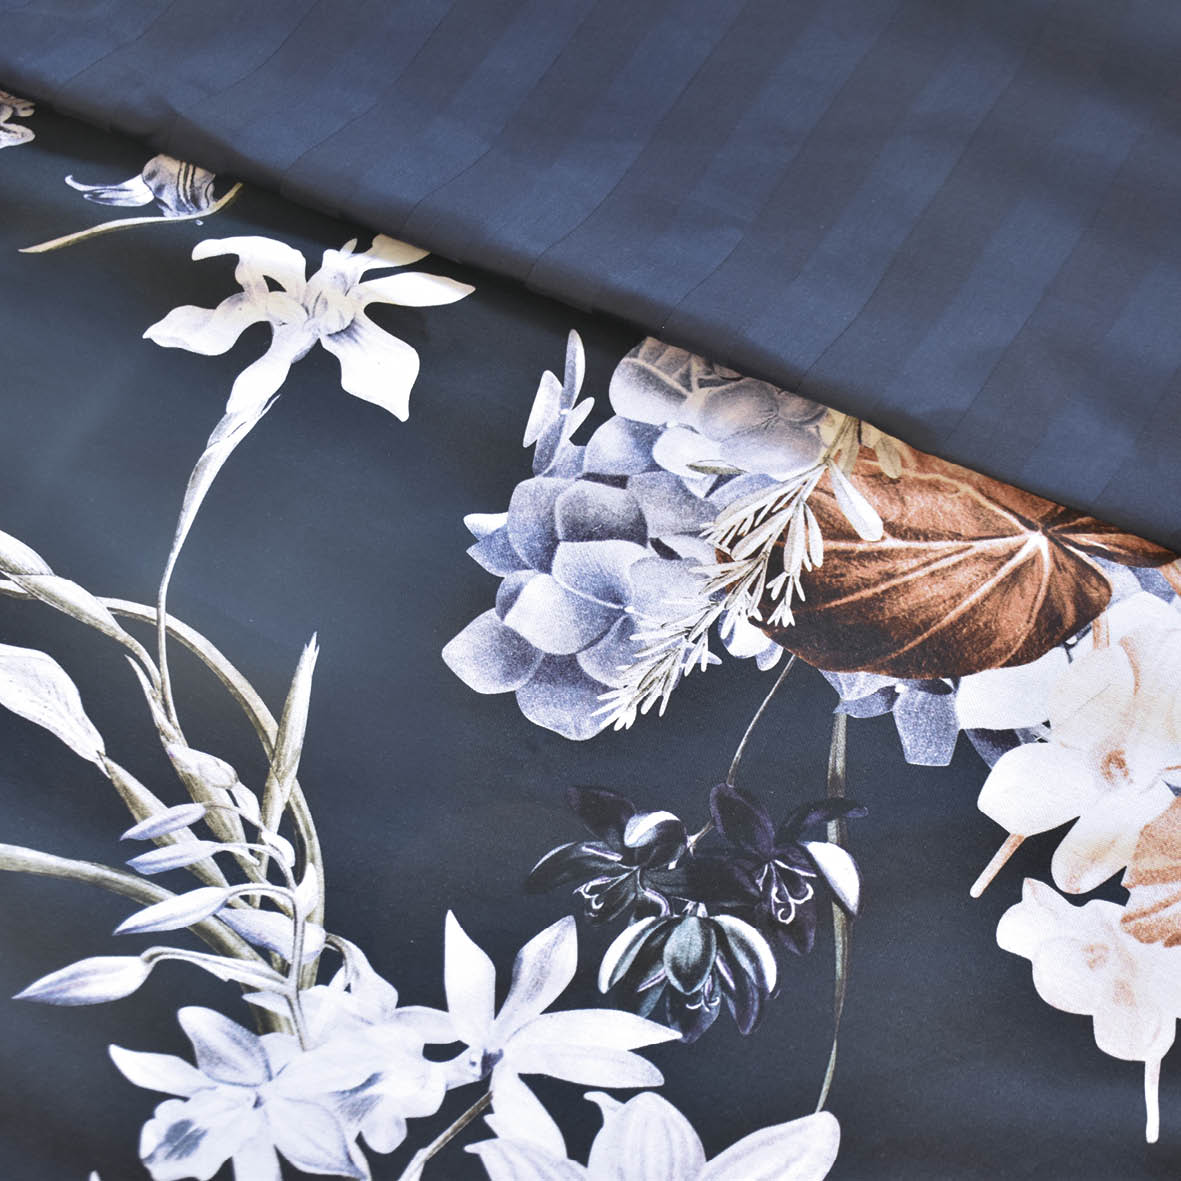 Pillowcase(s) cotton satin - Bouquet d'hortensias dark blue